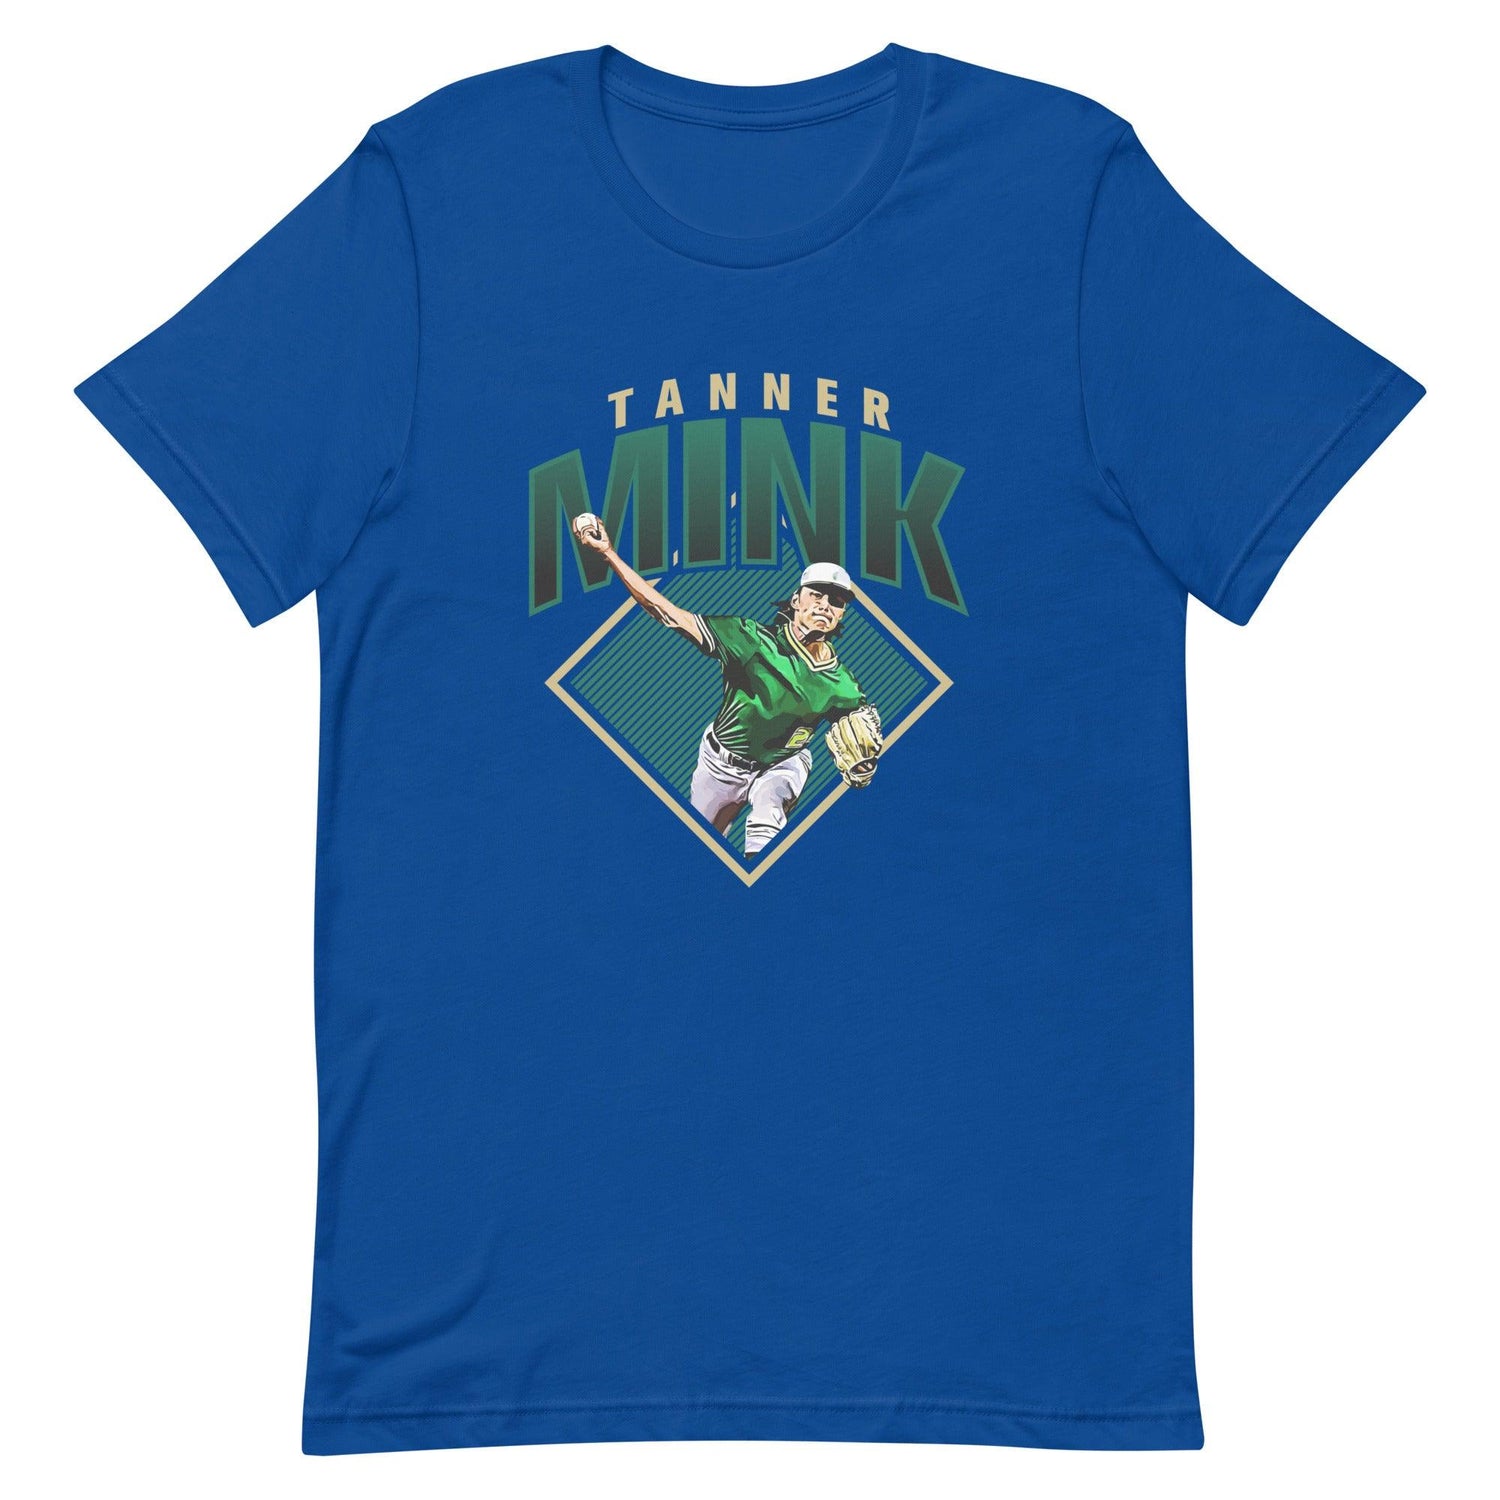 Tanner Mink "Gameday" t-shirt - Fan Arch